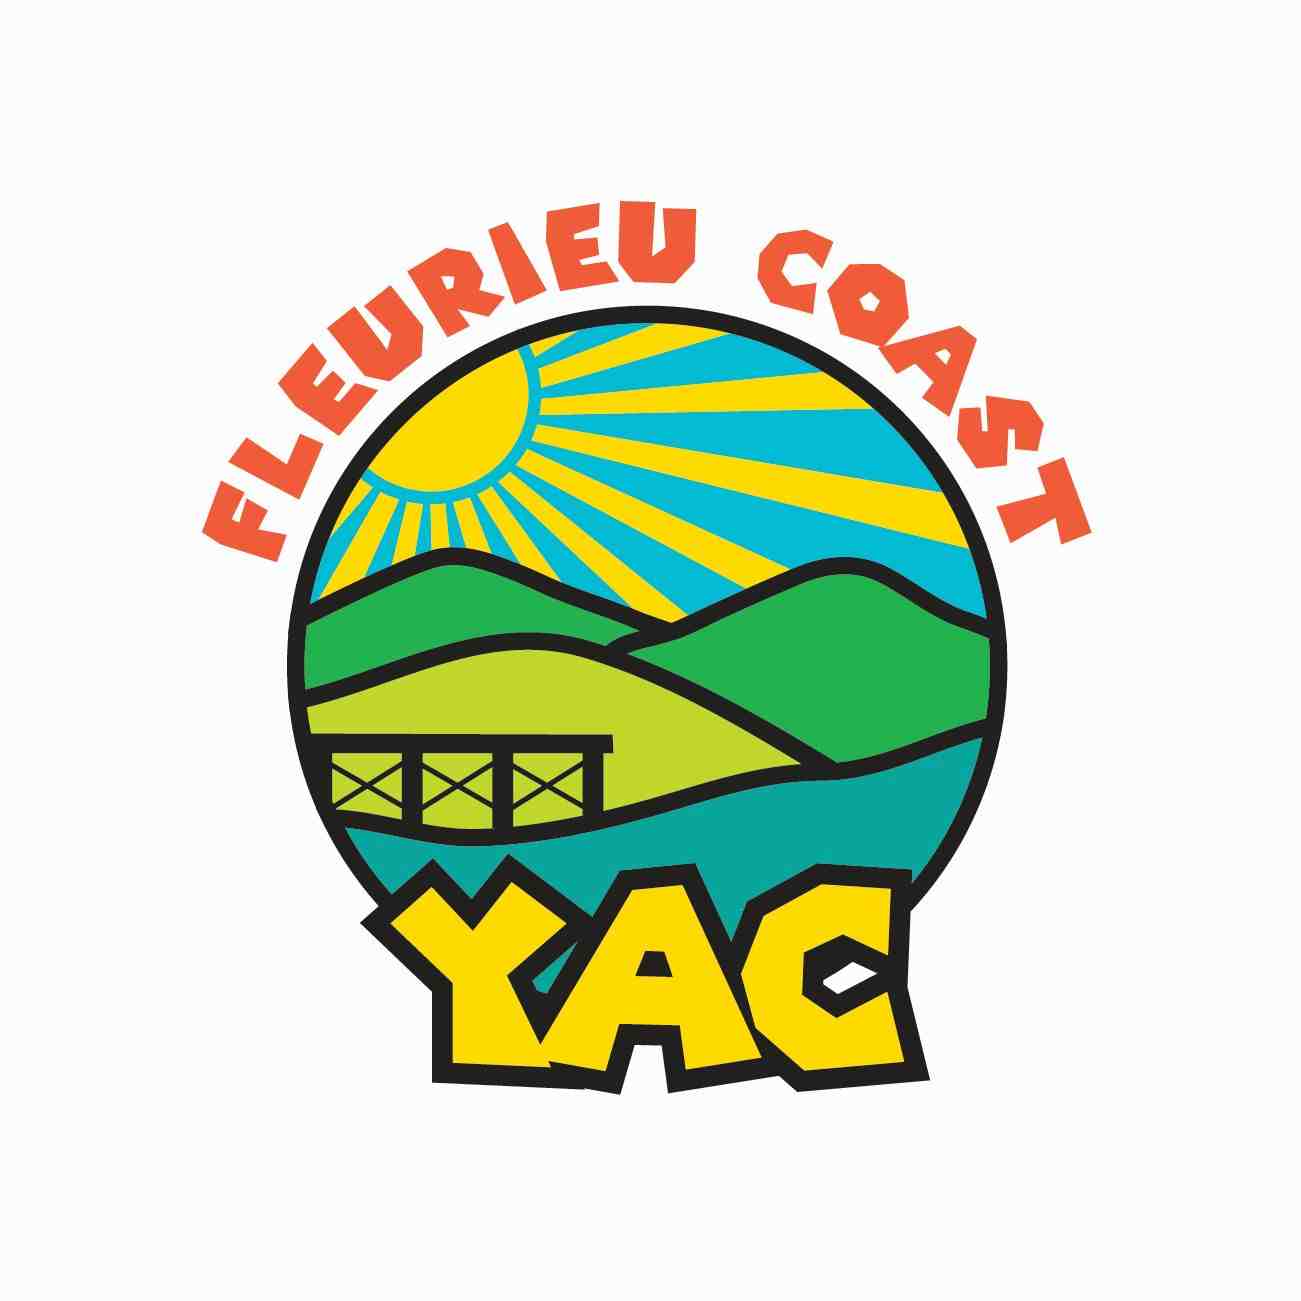 Youth Advisory Committee logo